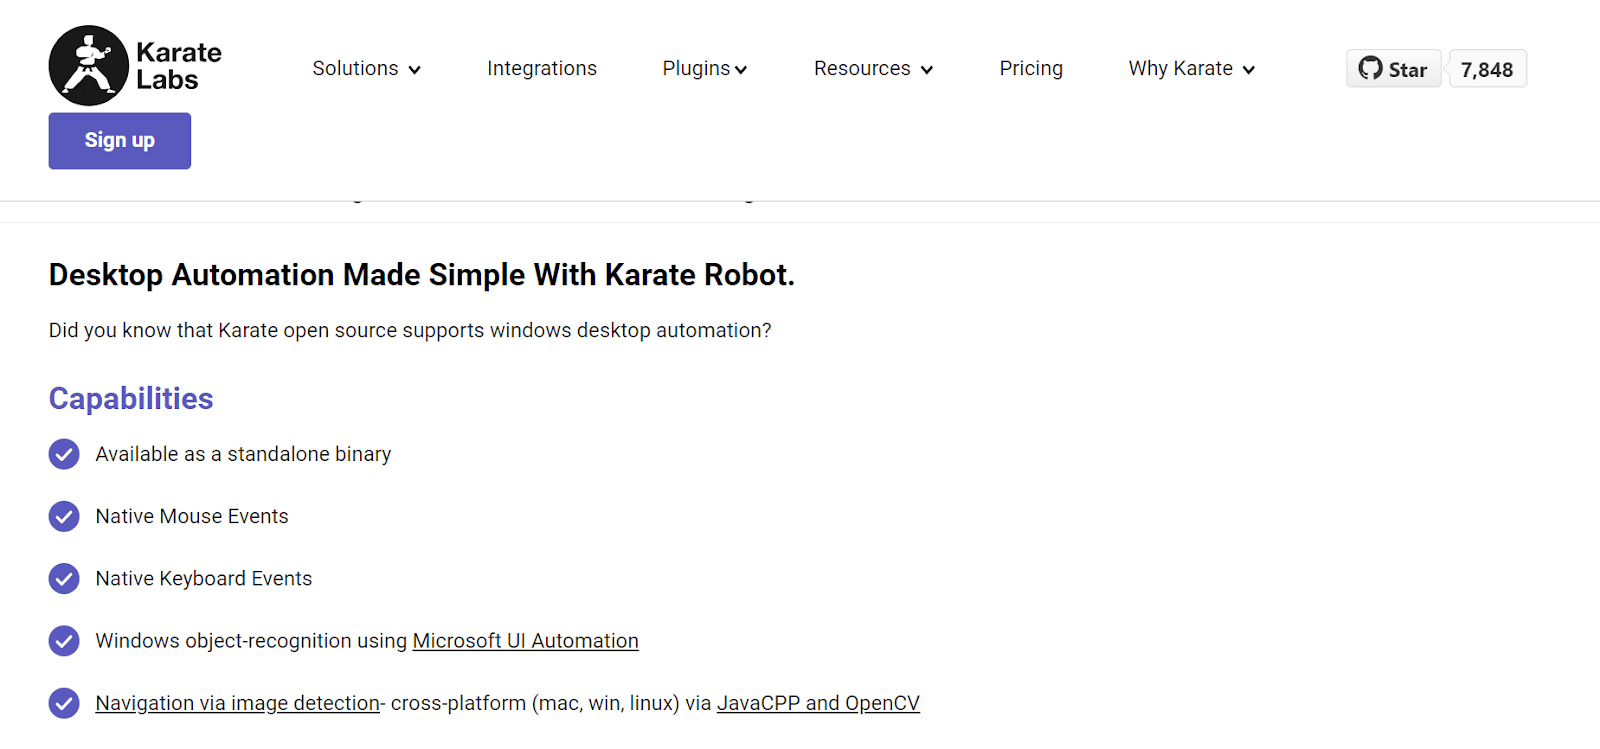 Karate Labs desktop automation tool